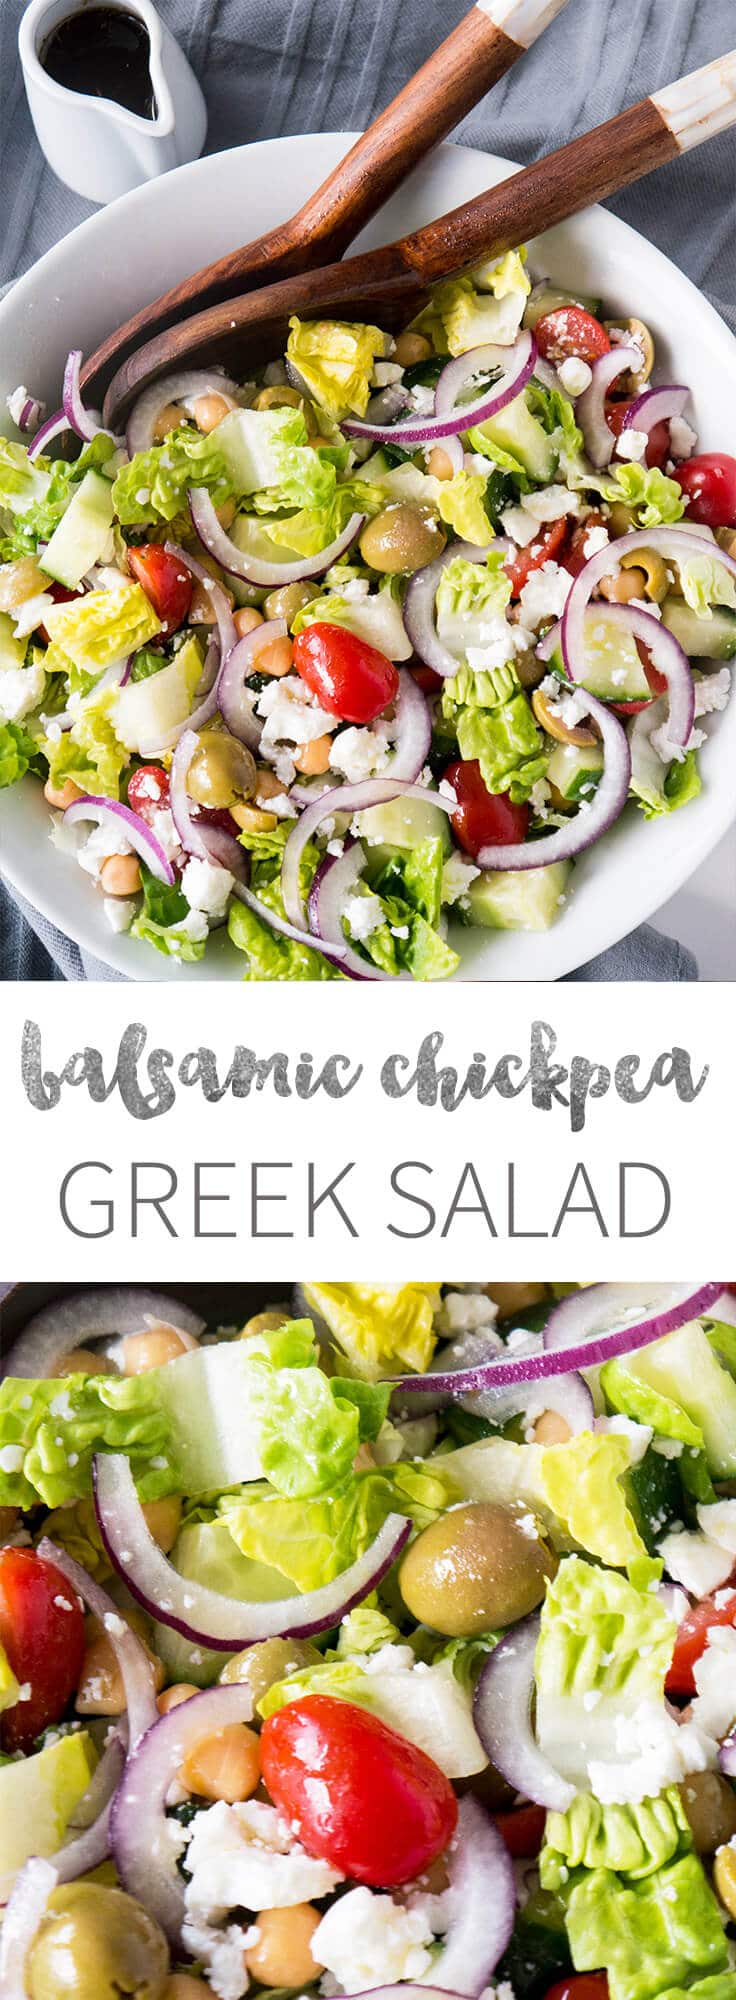 Balsamic Chickpea Feta Greek Salad w/ tomatoes & red onions